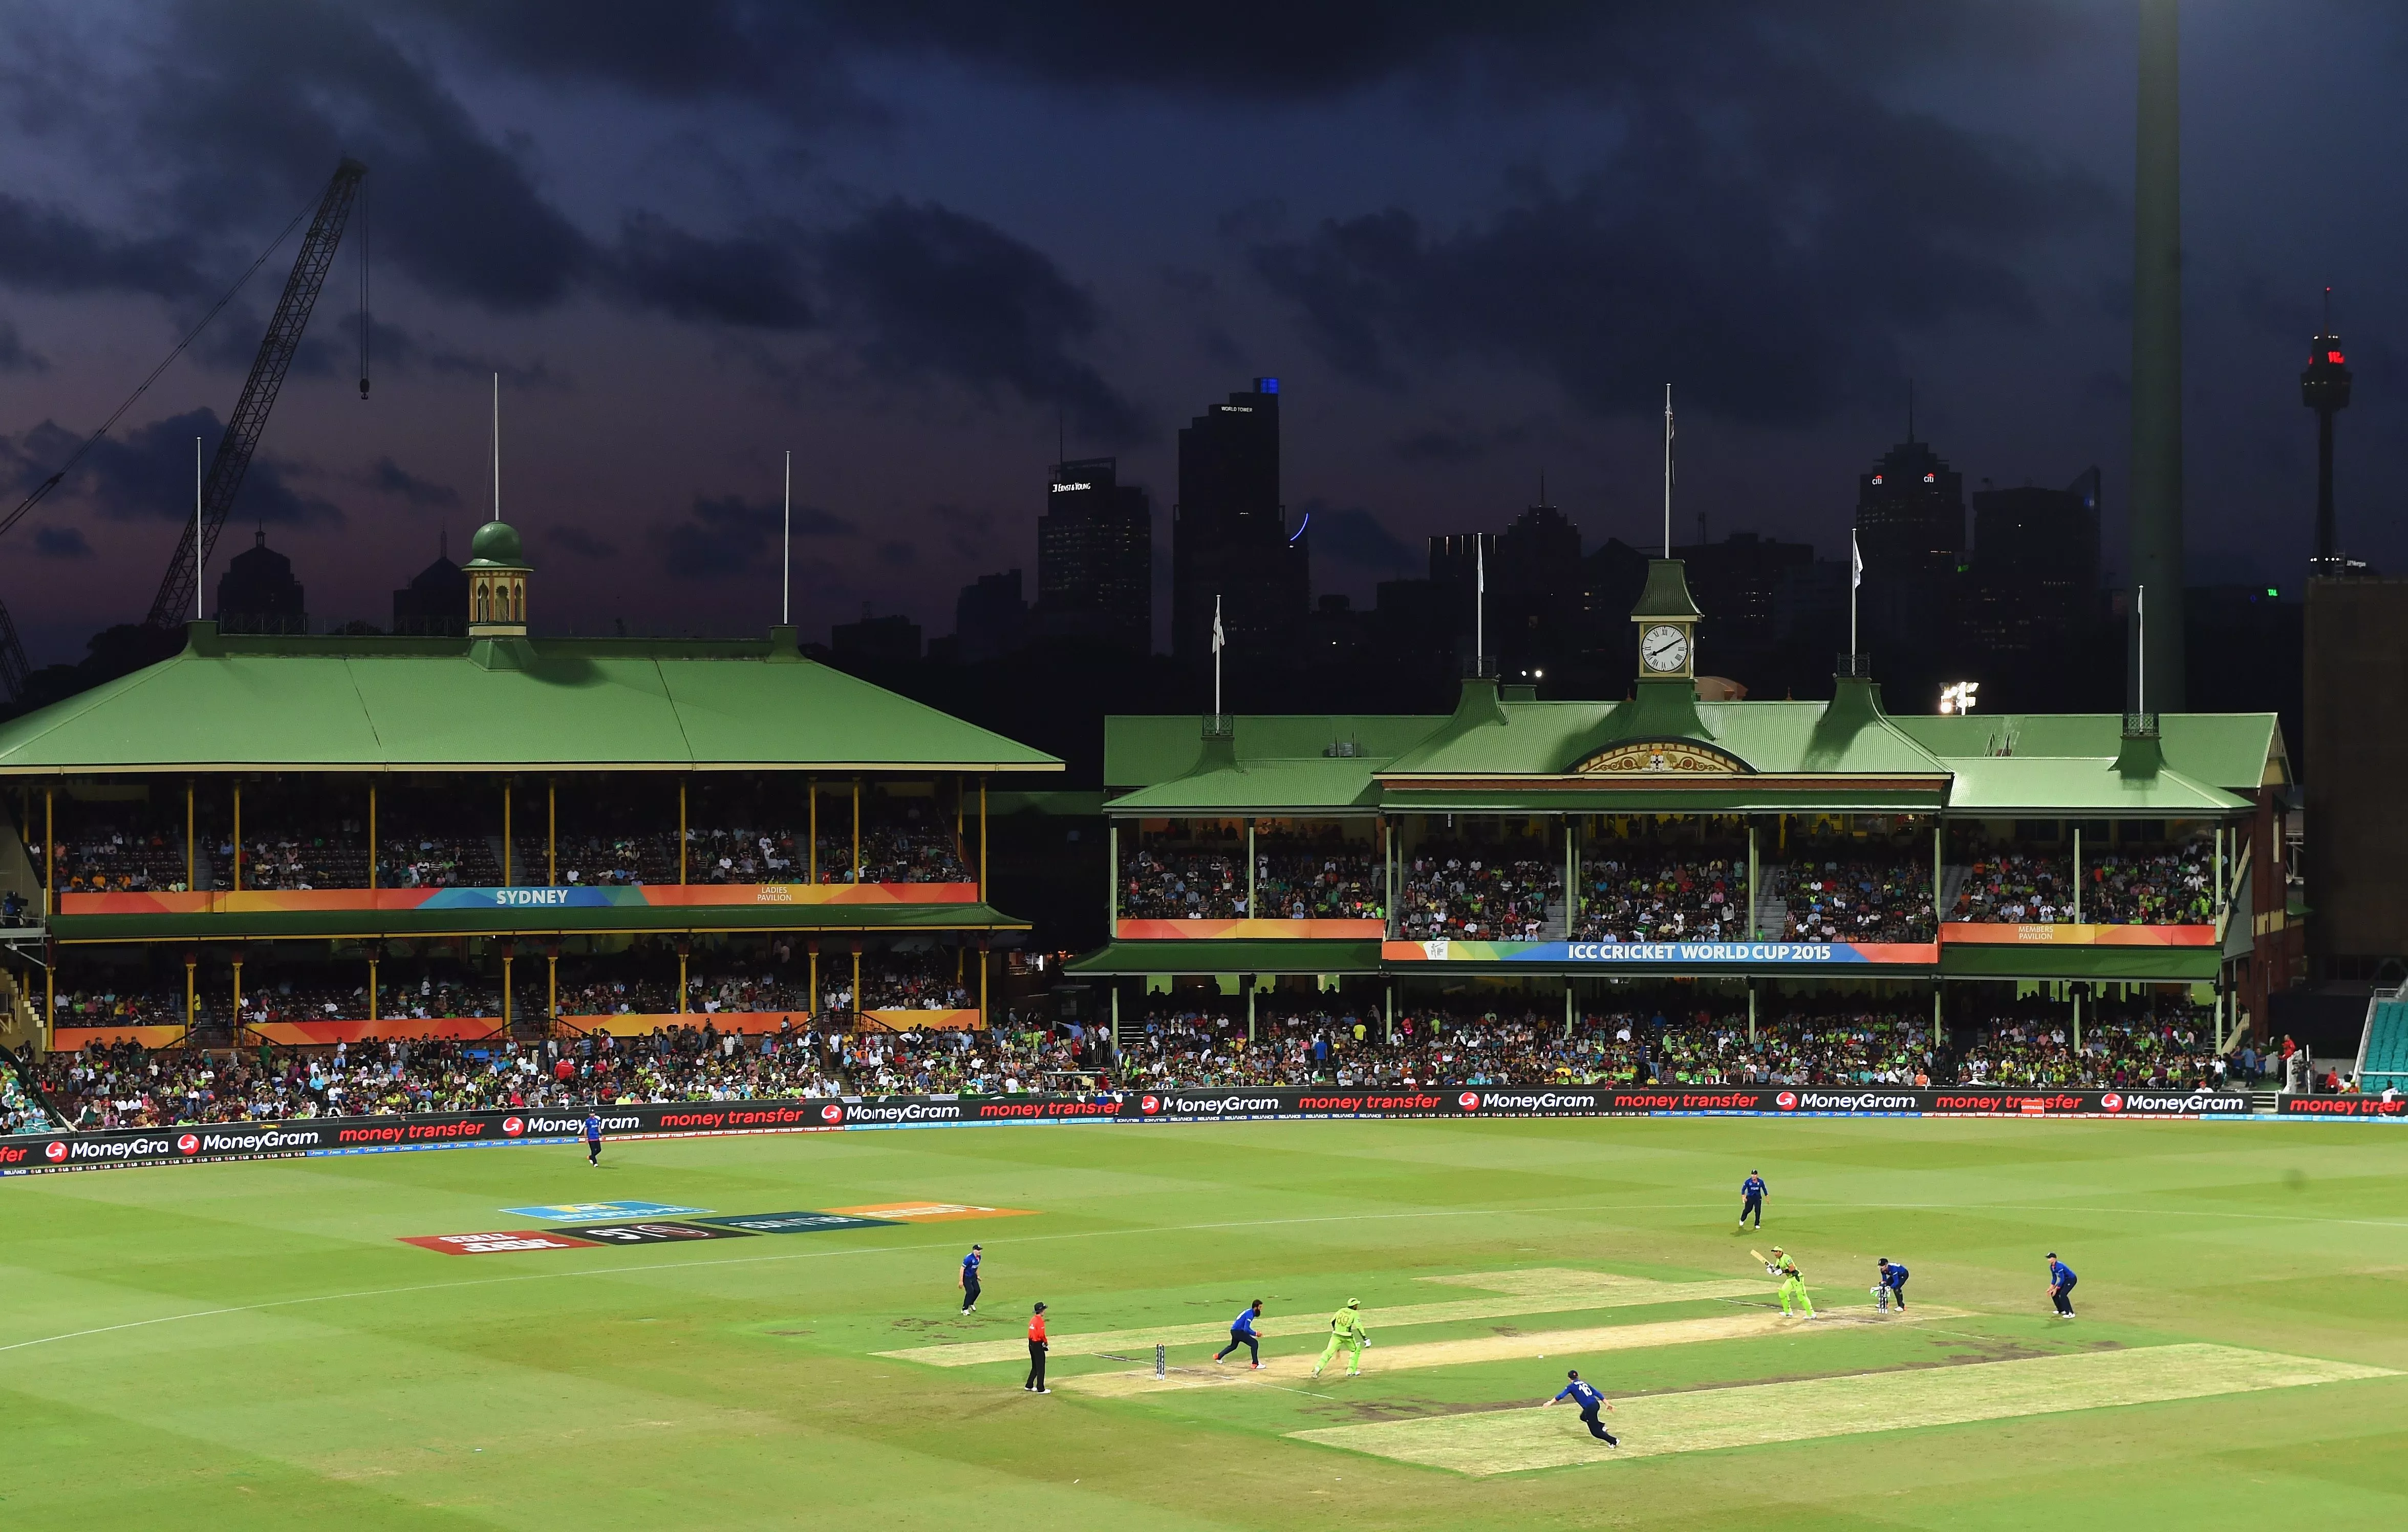 Sydney Cricket Ground in Australia, Australia and Oceania | Cricket - Rated 4.6